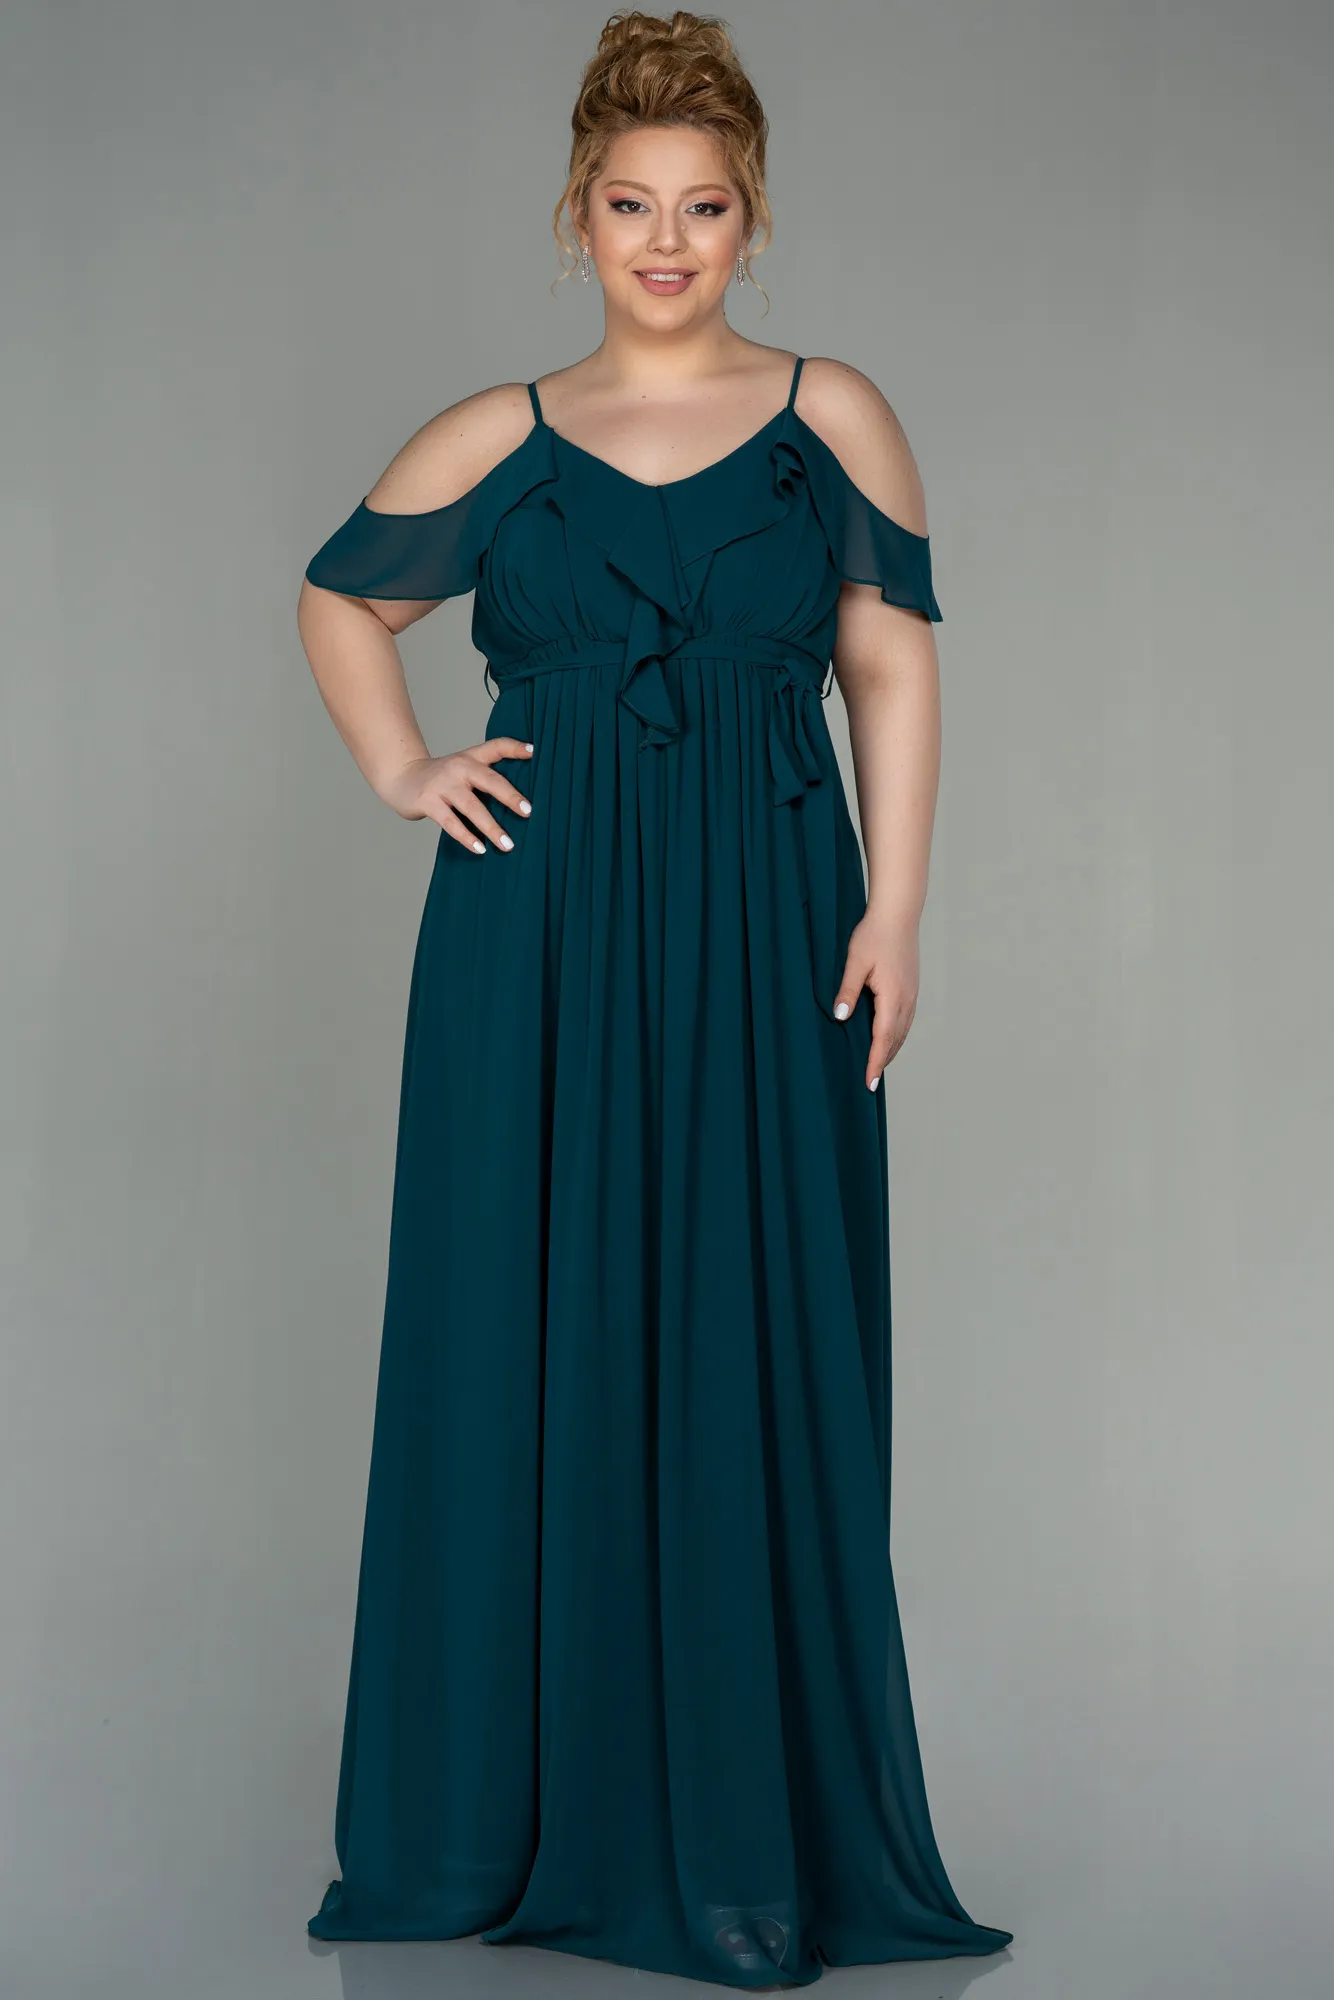 Emerald Green-Long Plus Size Evening Dress ABU1449